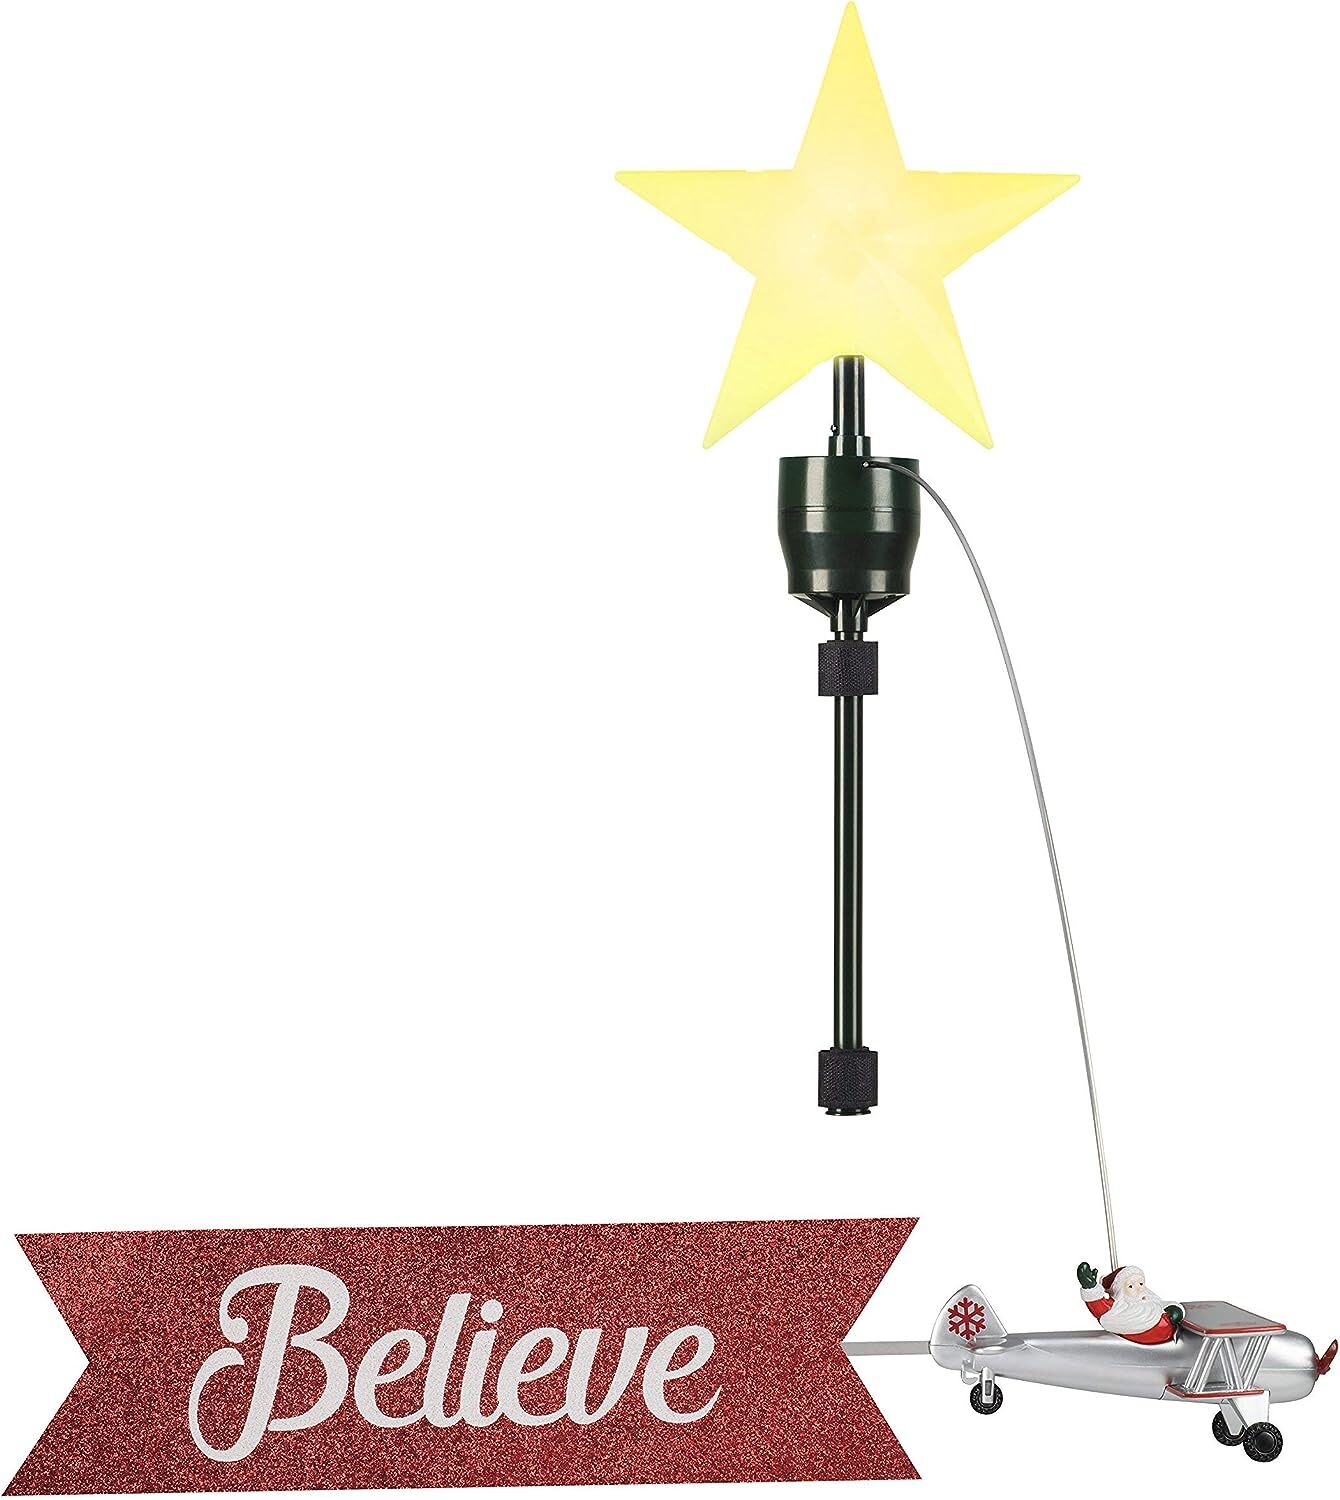 Mr. Christmas Animated Tree Topper-Carousel Christmas Decoration, Multi